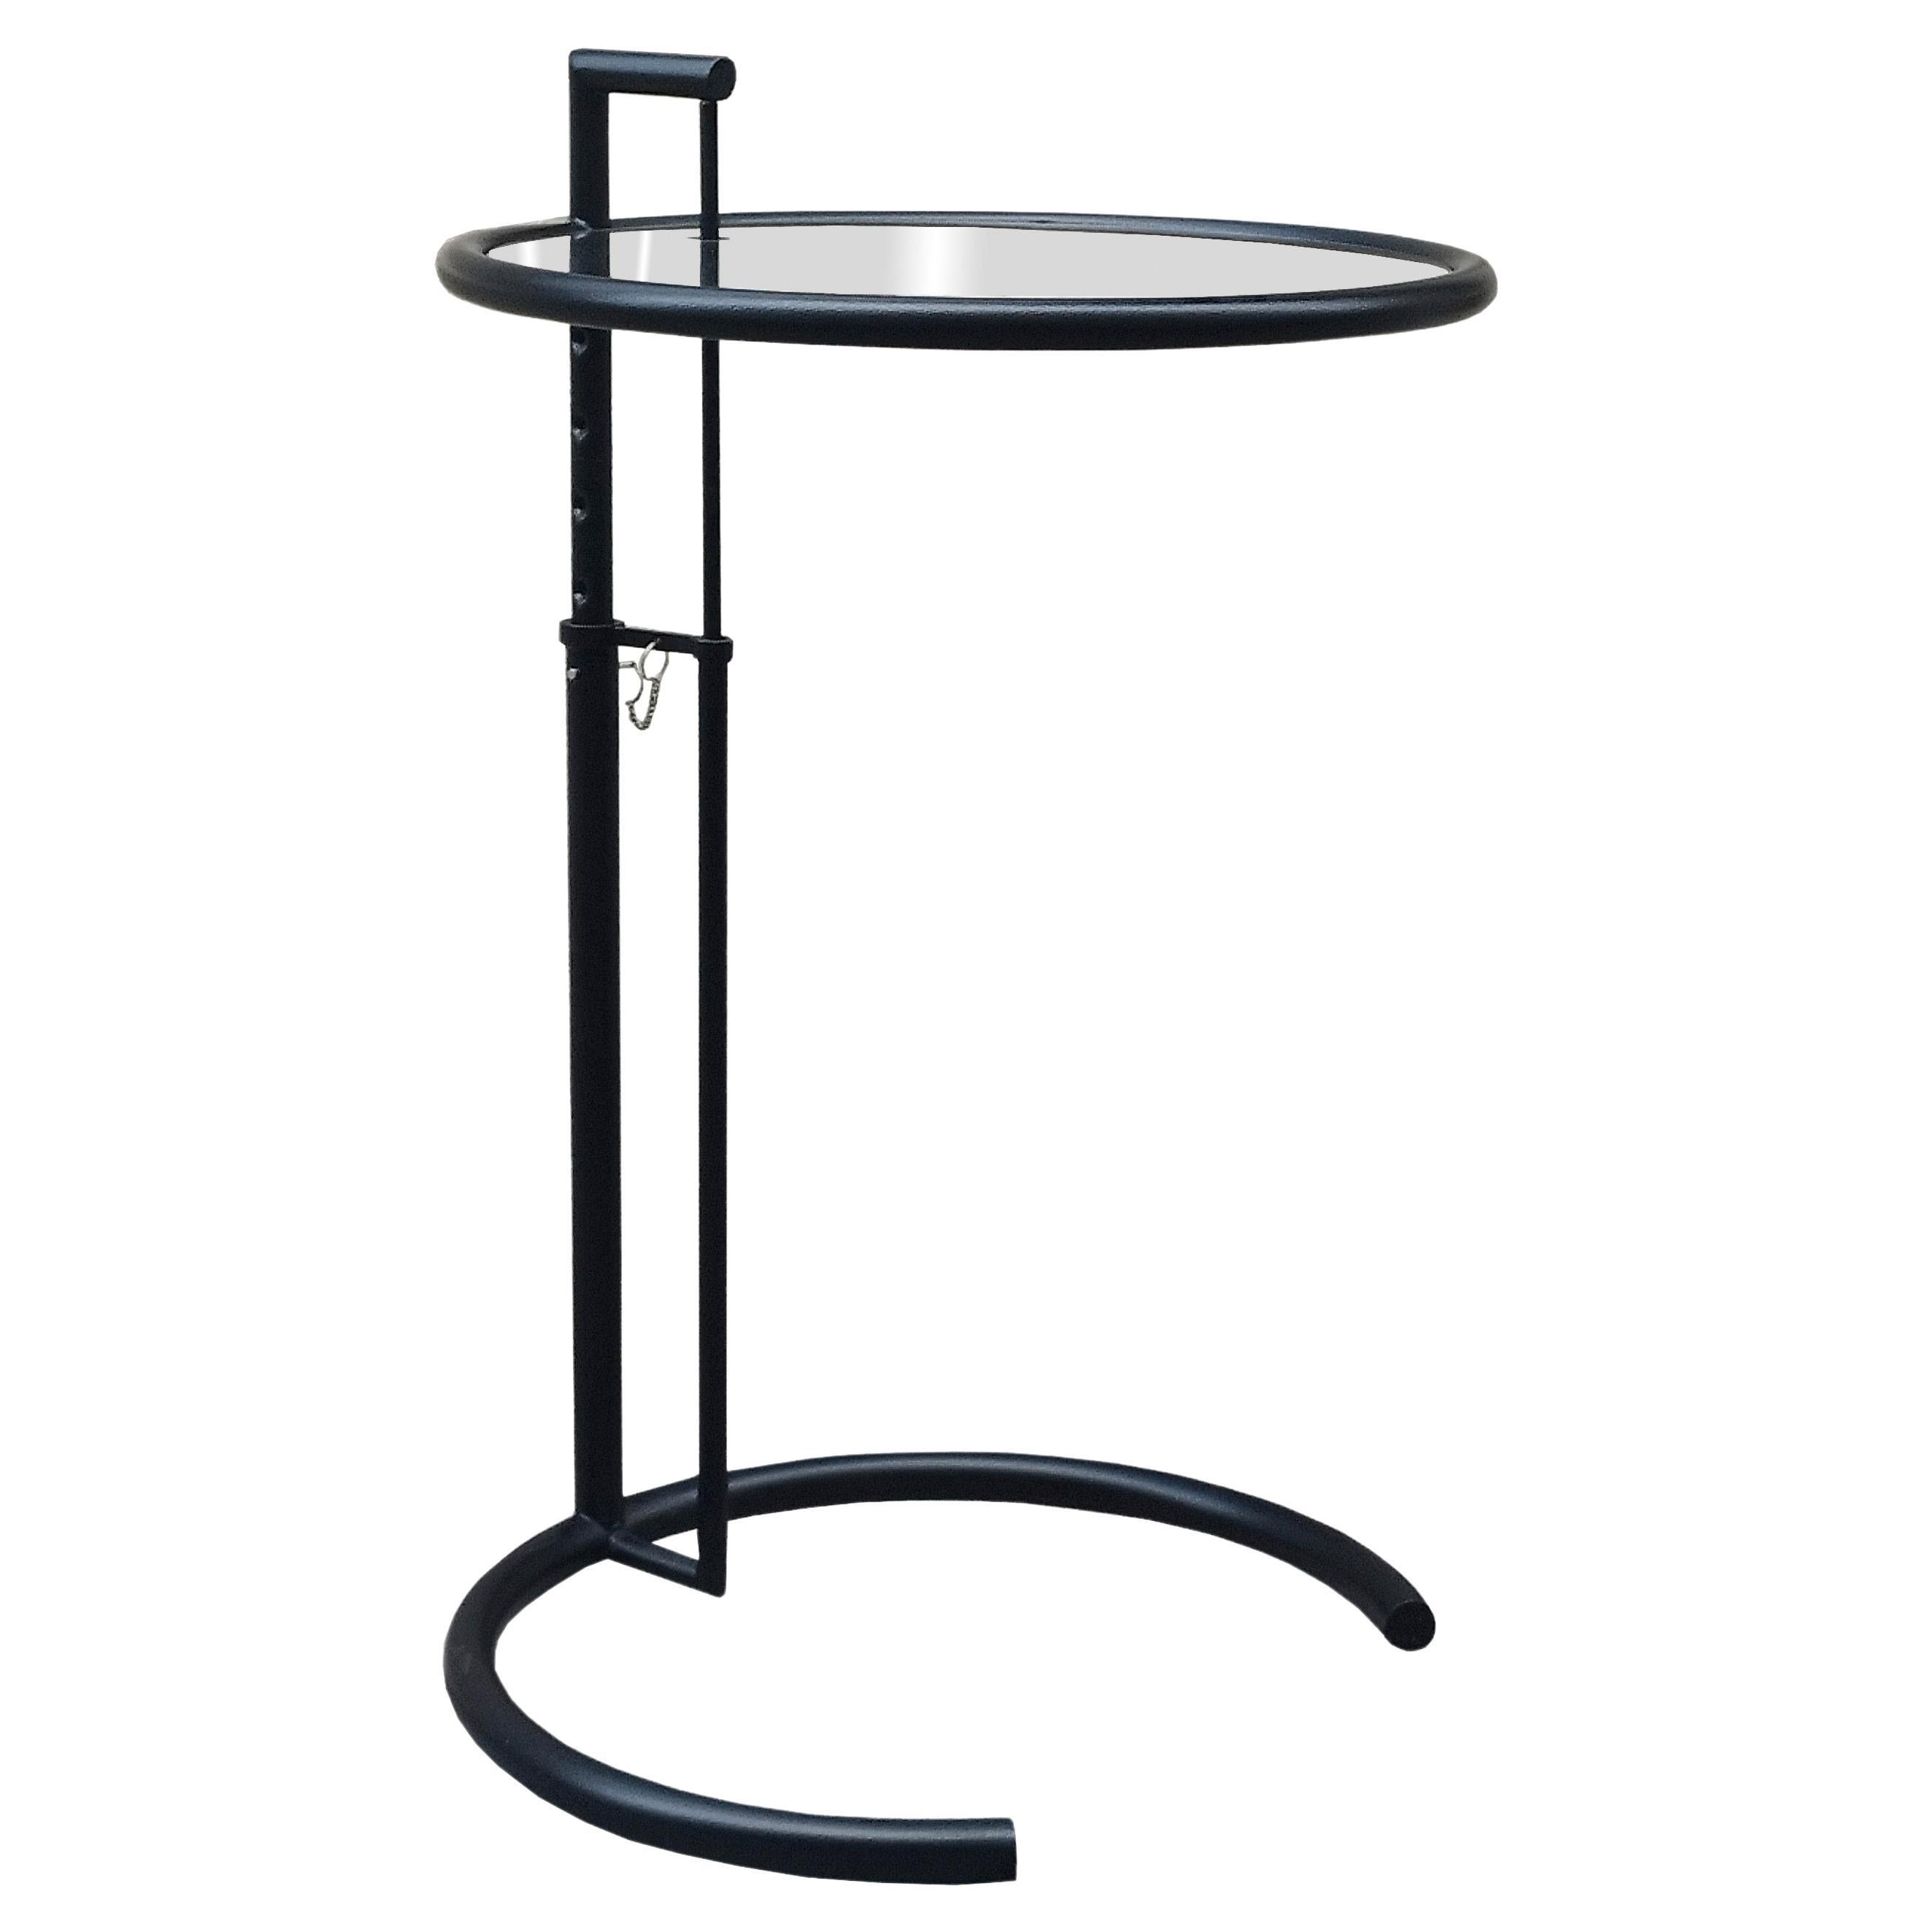 Eillen Gray for Classicon E1027 Adjustable Side Table, Italy 2010